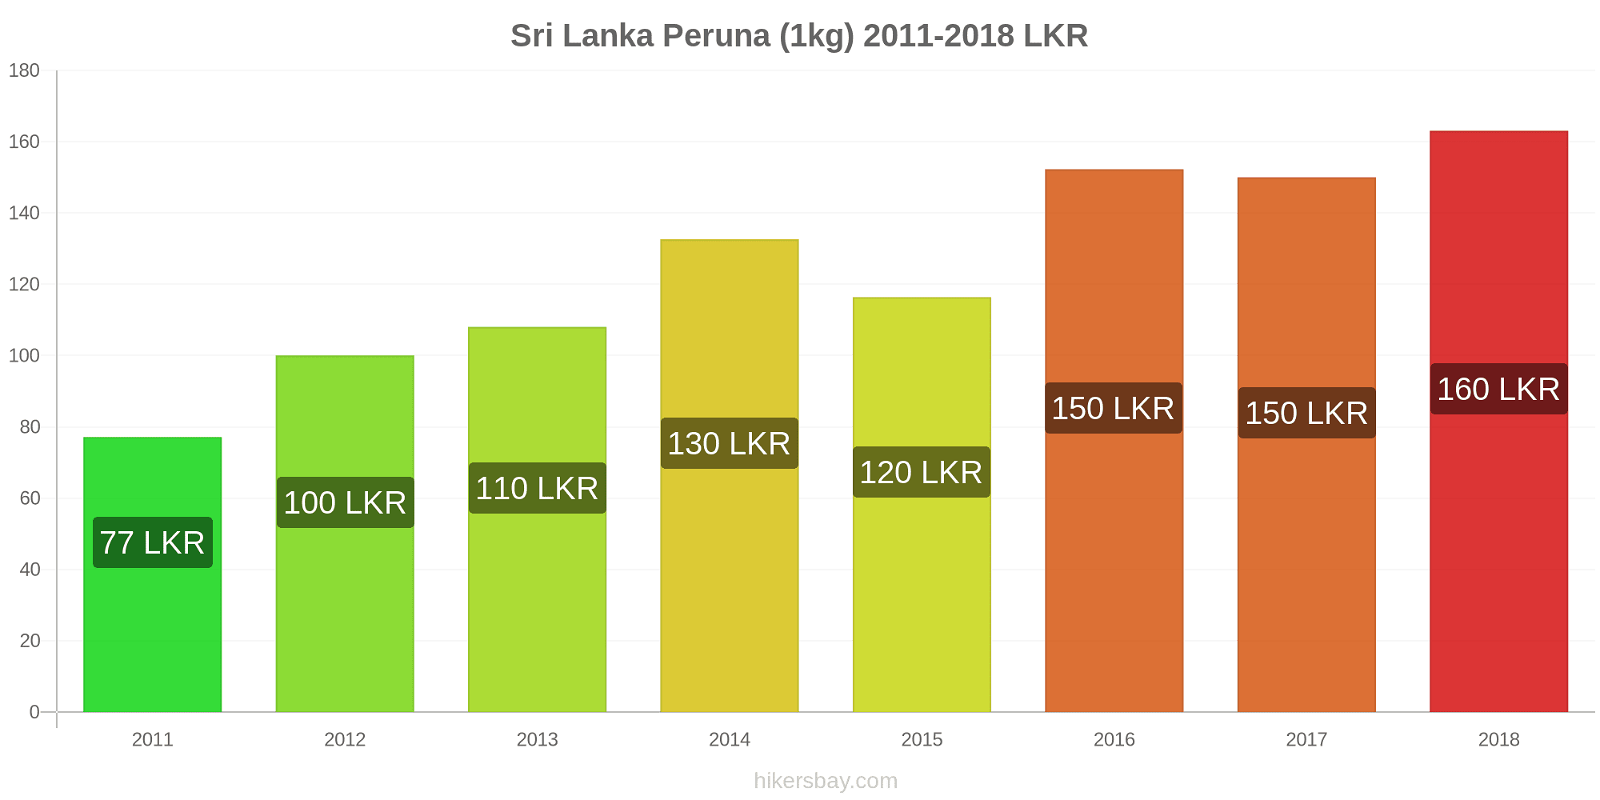 Sri Lanka hintojen muutokset Peruna (1kg) hikersbay.com